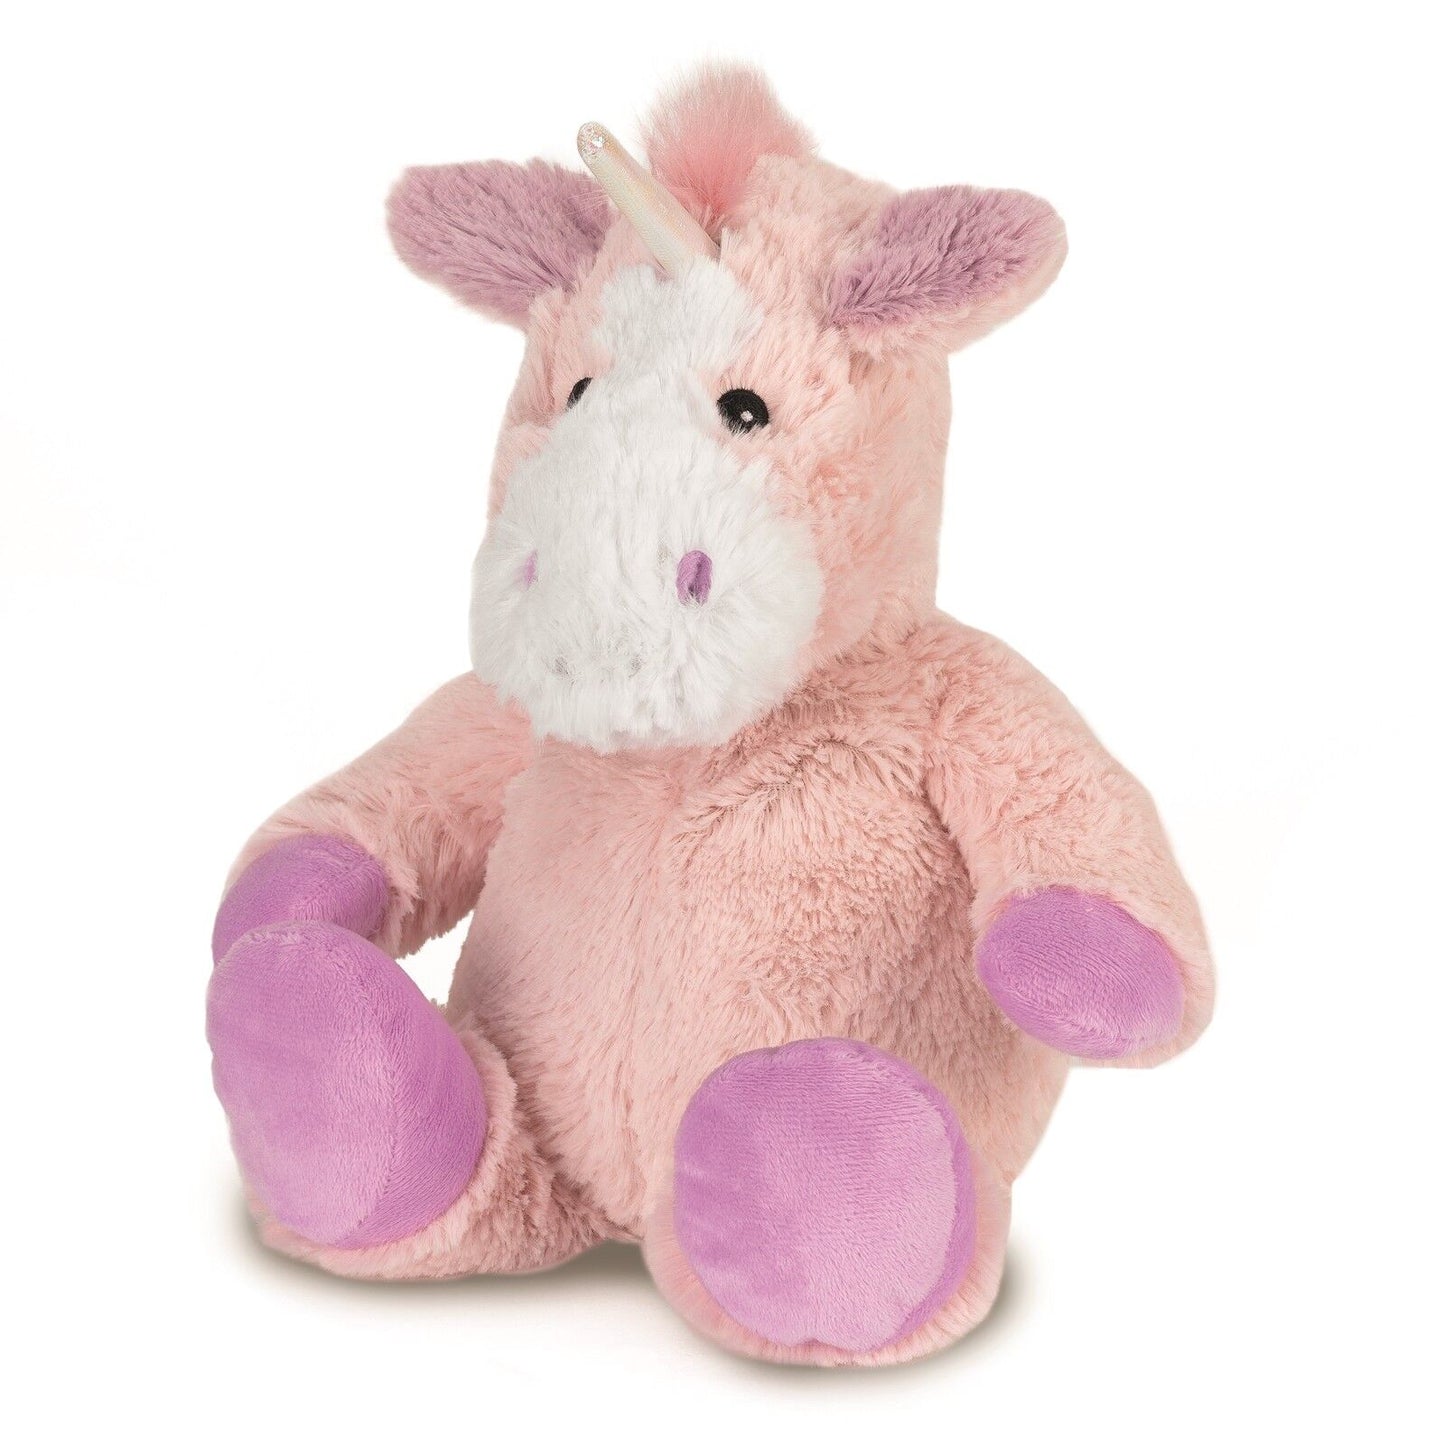 Intelex Warmies Large Cozy Plush Microwavable Lavender Soft Toy Animals